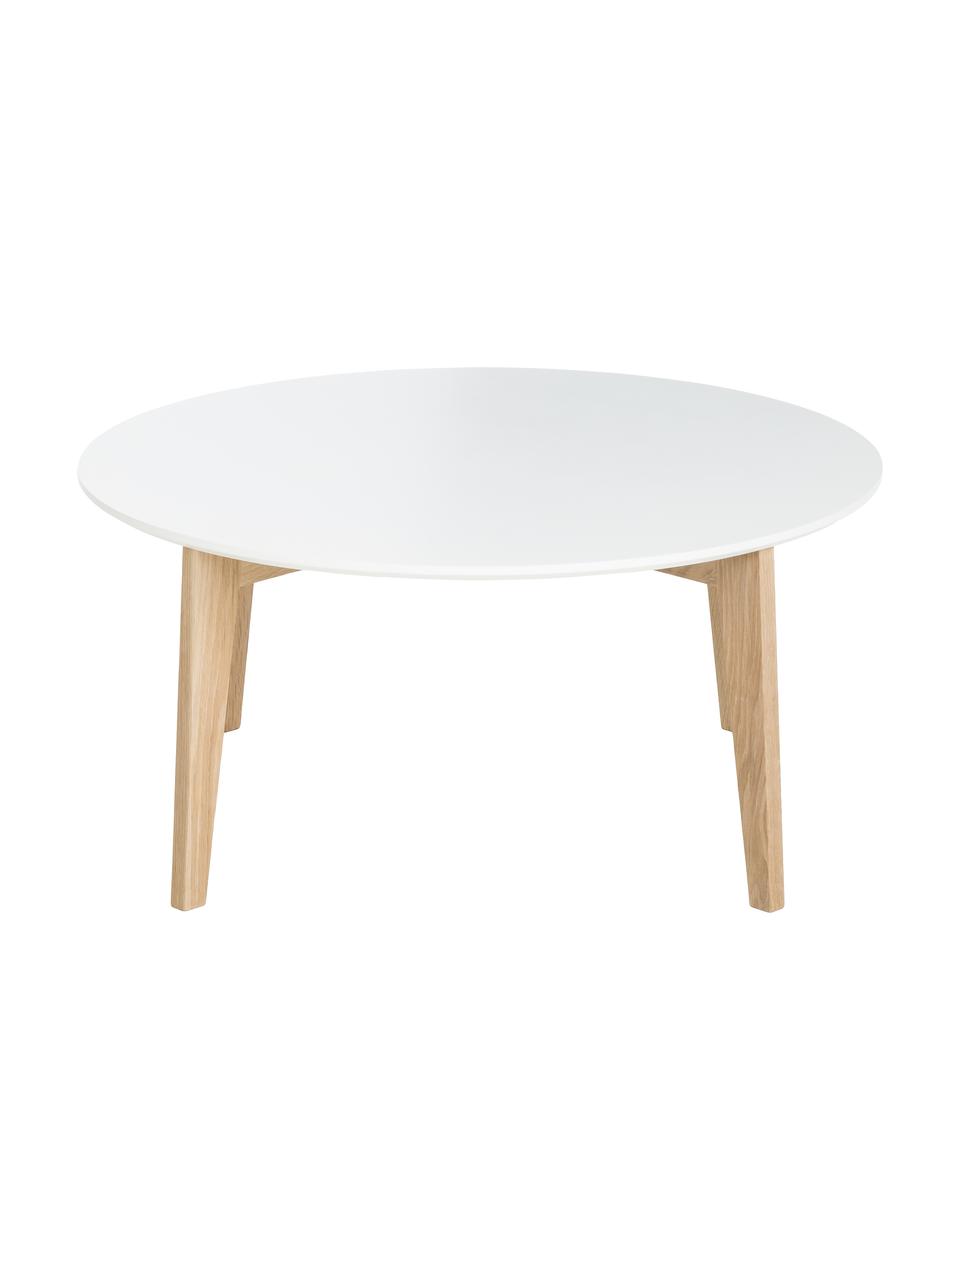 Grande table basse scandinave Lucas, Blanc, chêne, Ø 90 x haut. 42 cm